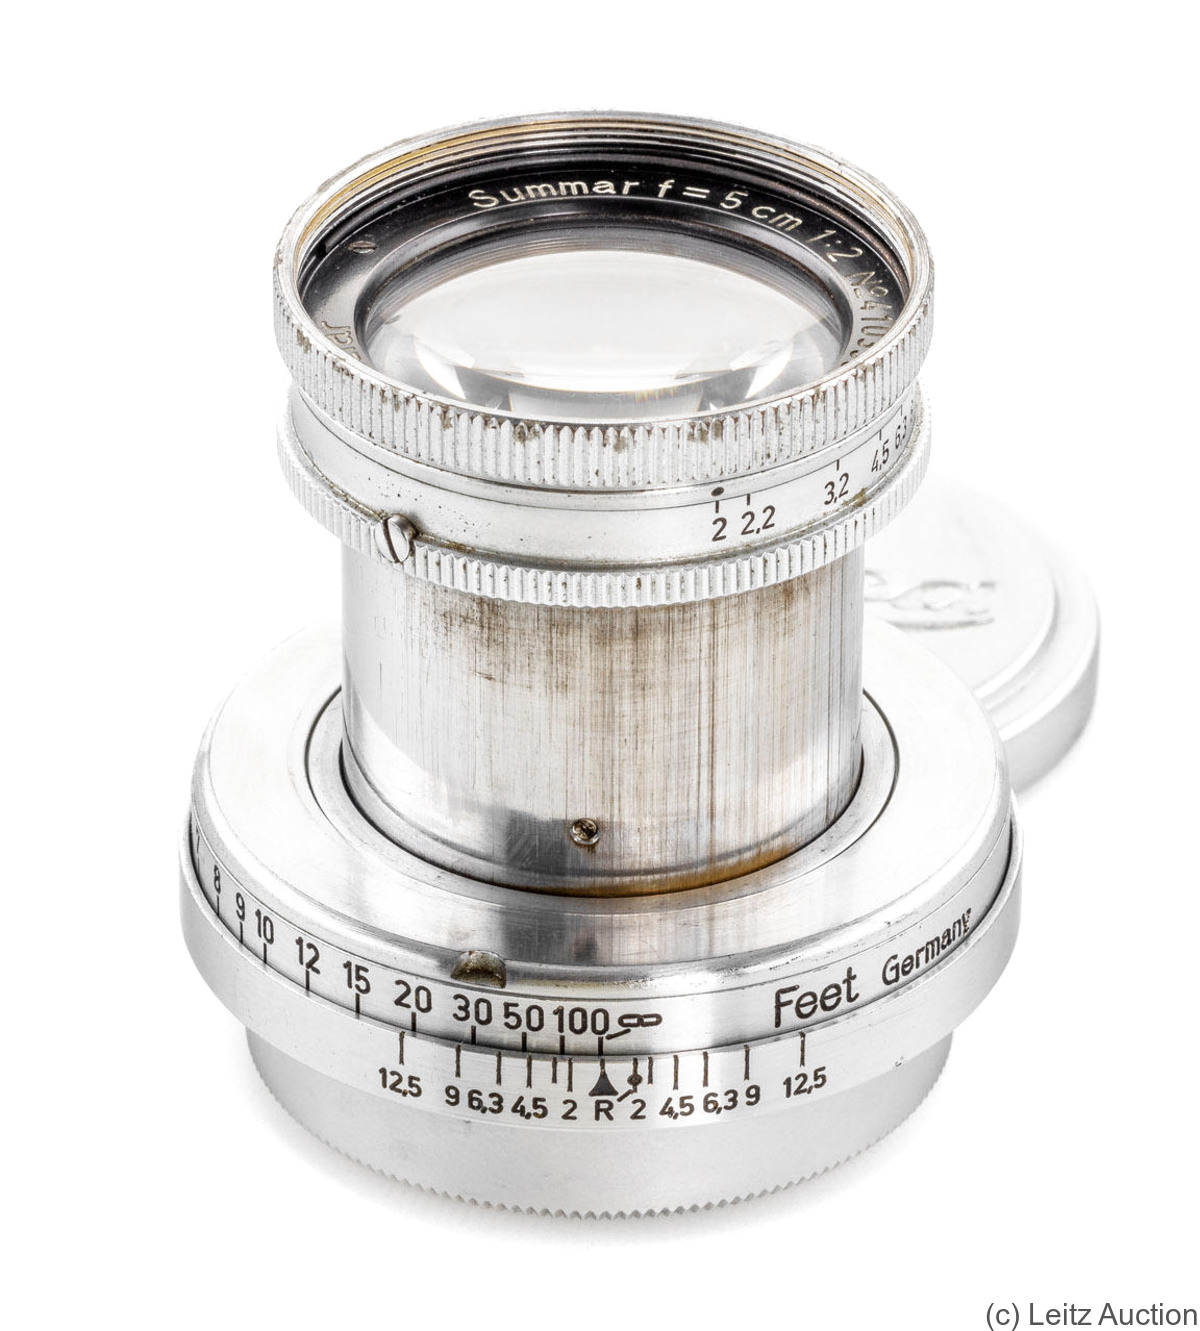 Leitz: 50mm (5cm) f2 Summar (SM, collapsible, chrome) 'Tropen' camera